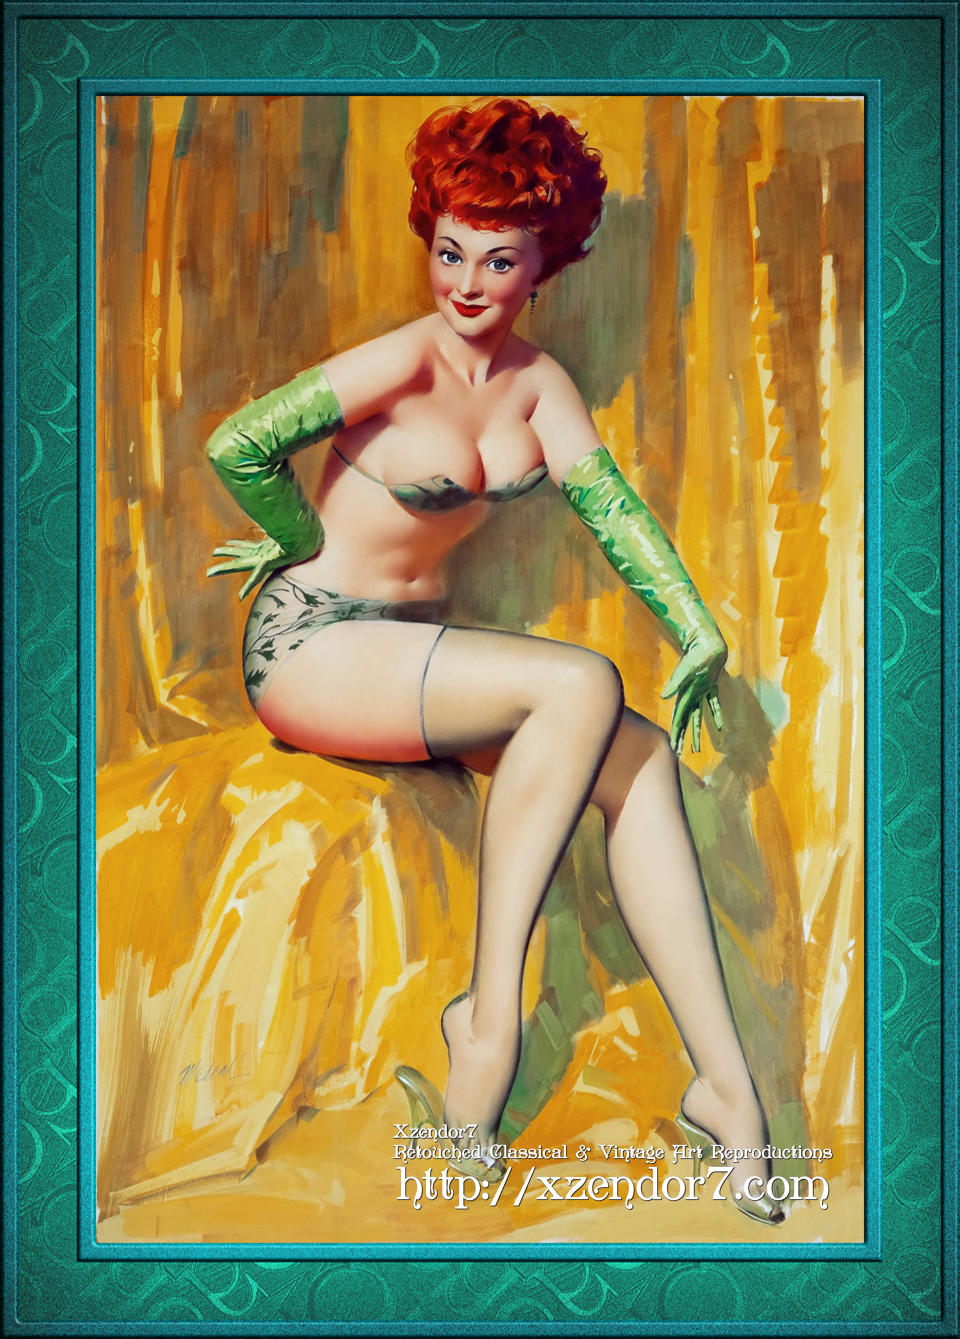 Redhead In A Green Bikini by Bill Medcalf